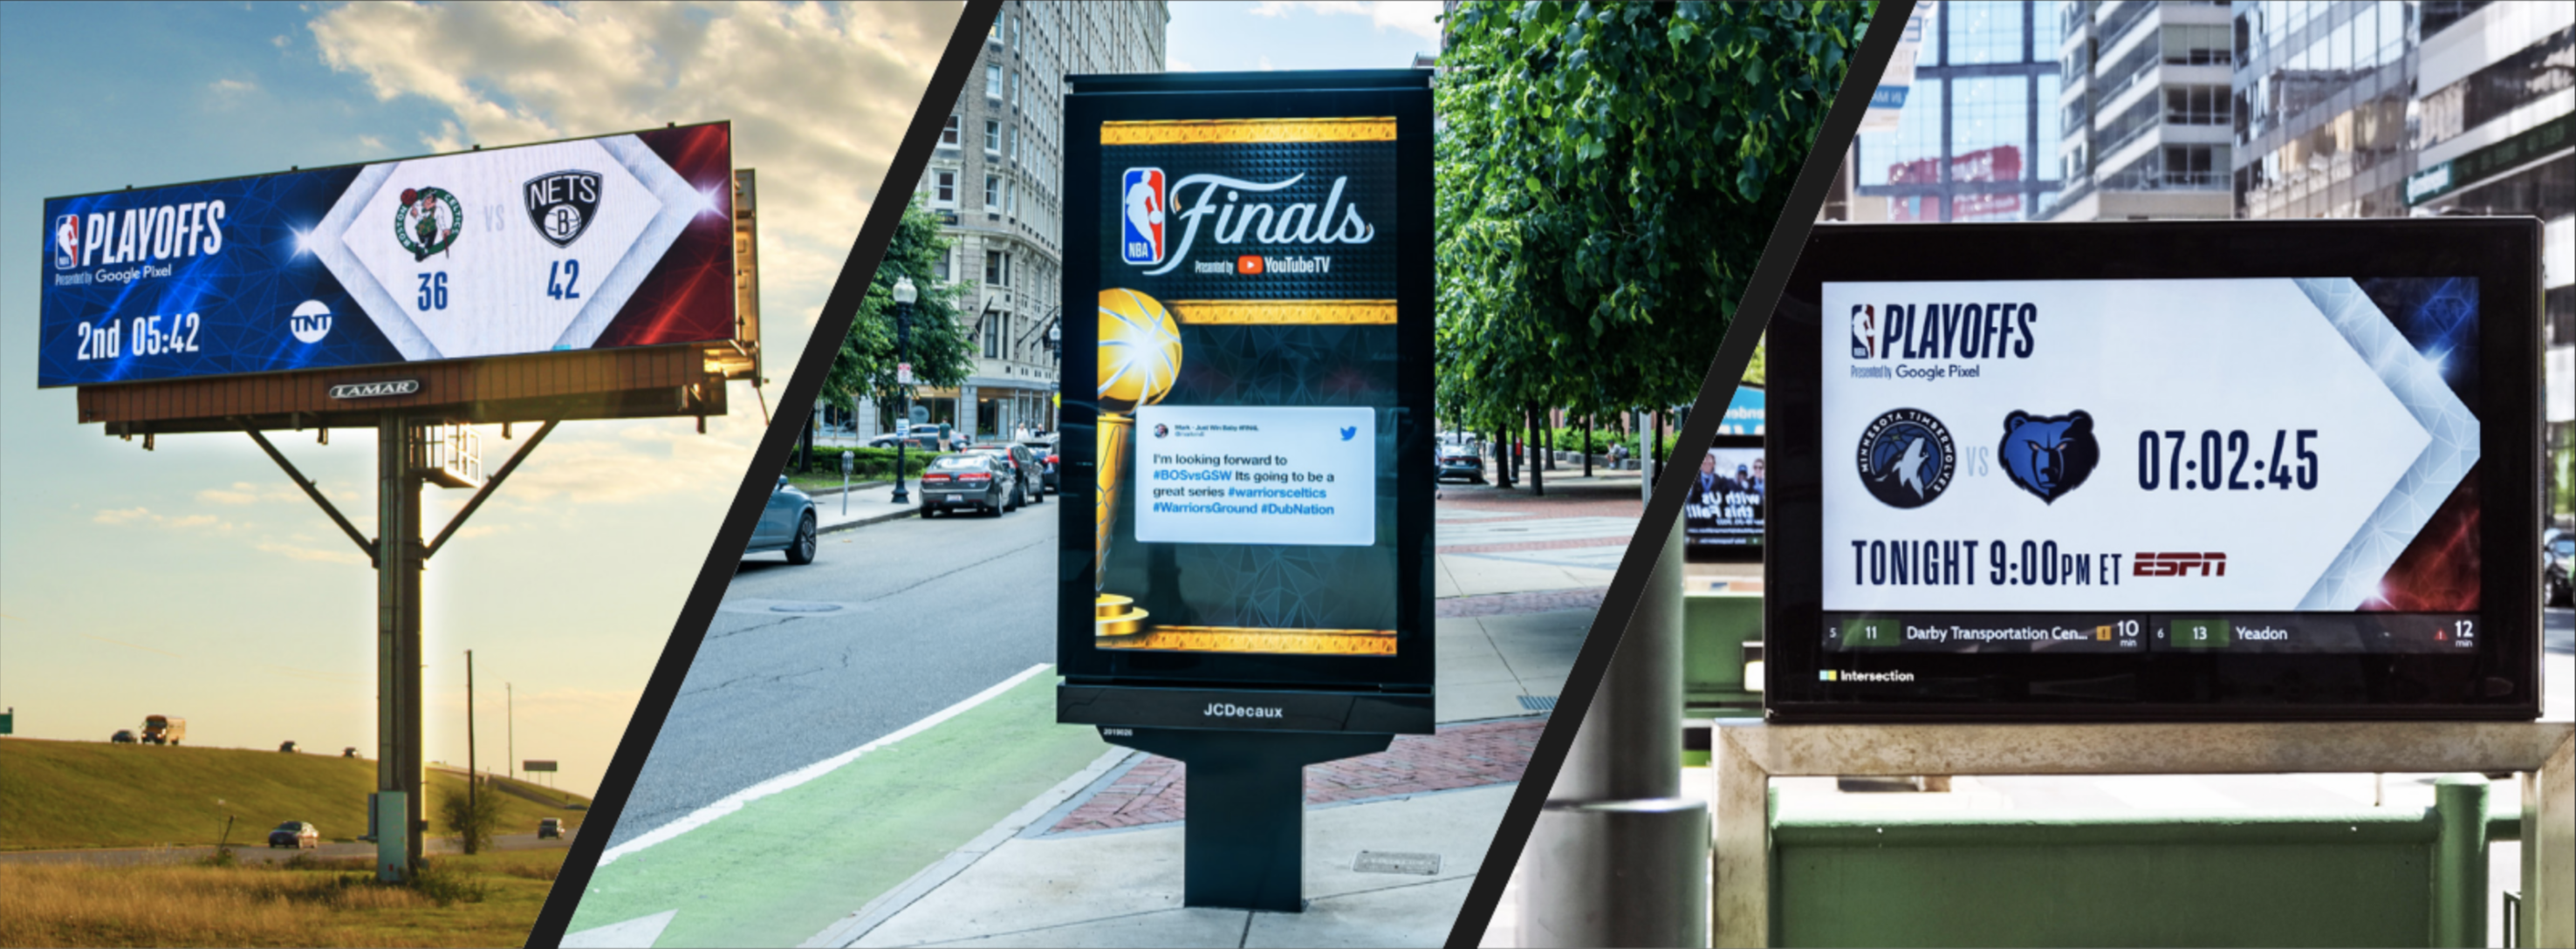 NBA playoffs DOOH ad